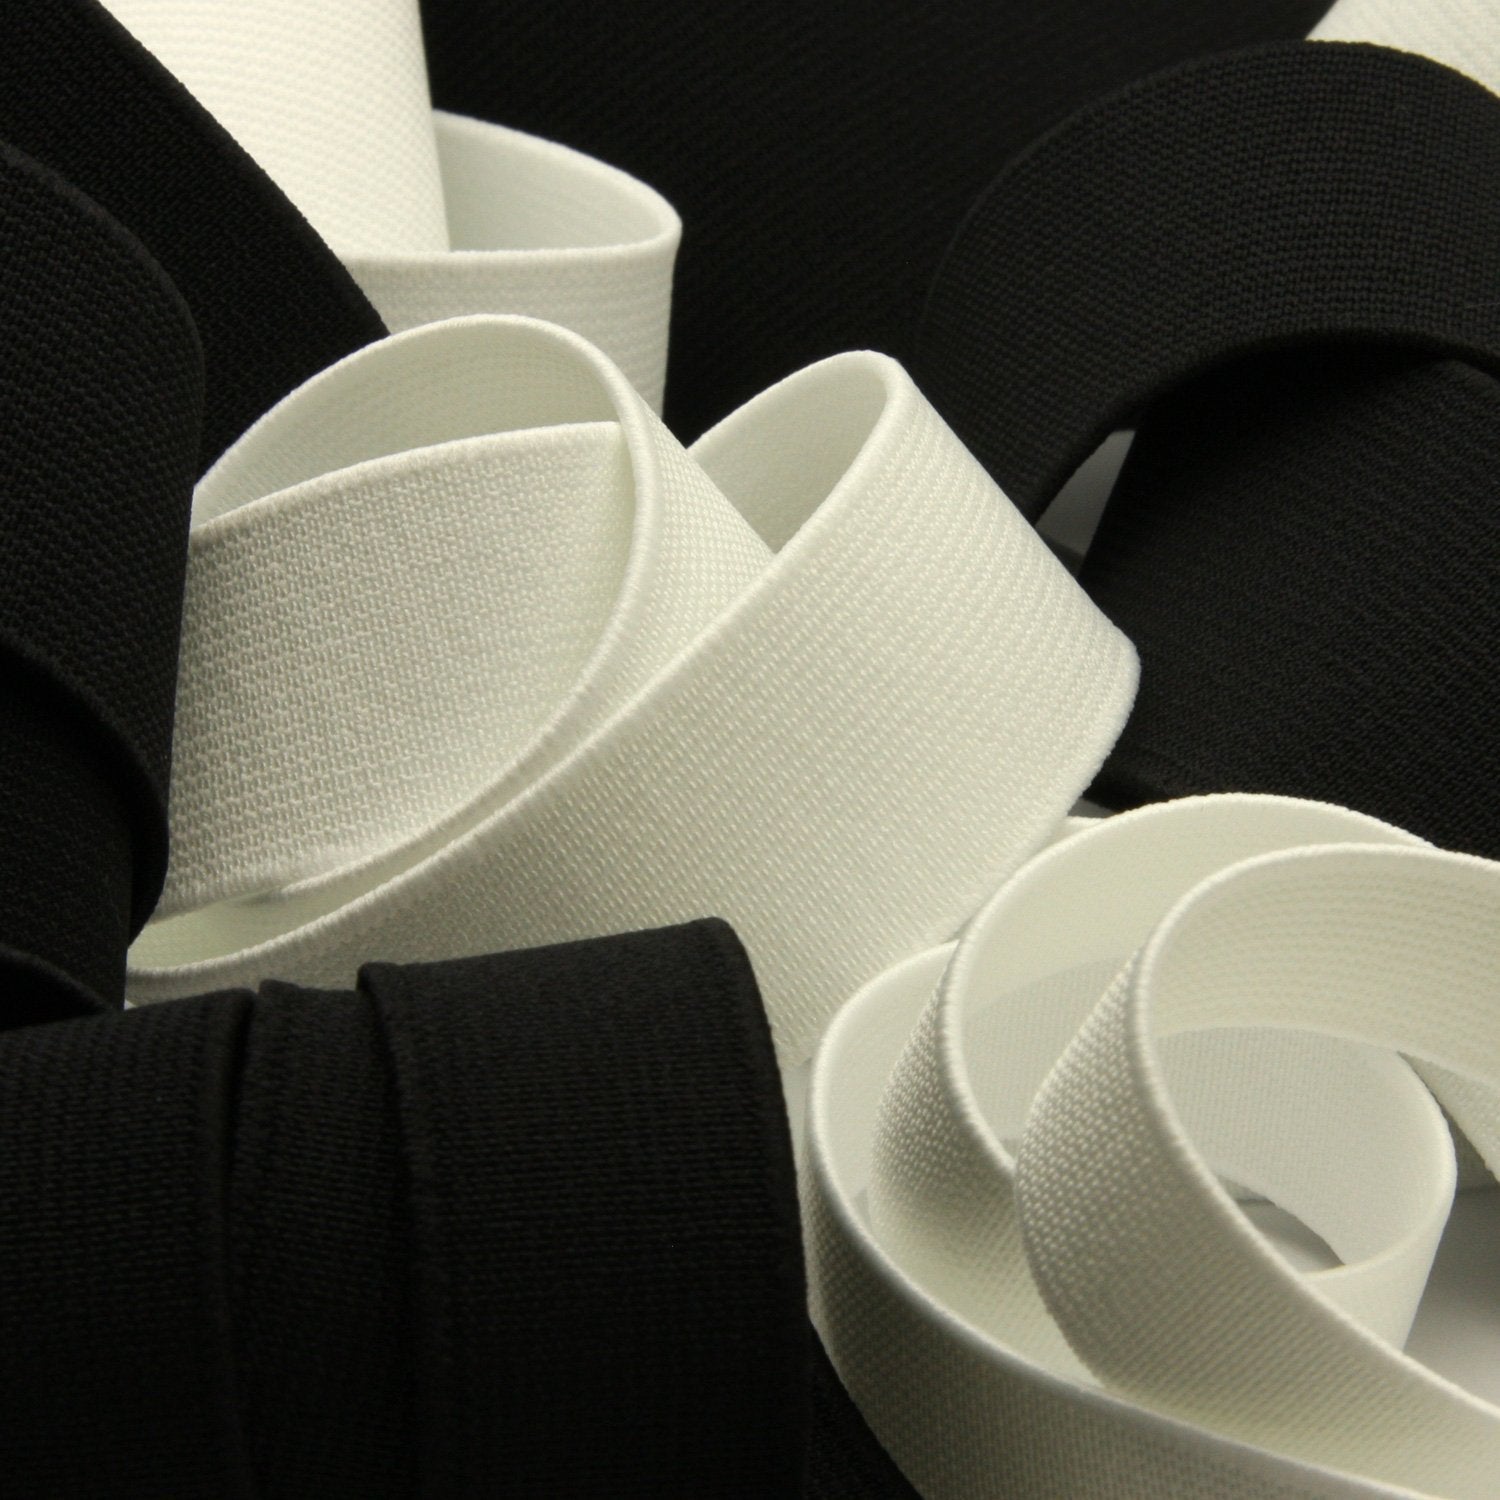 FUJIYAMA RIBBON [Wholesale] Soft Type Inside Belt 25mm 30 Meters Roll Off White